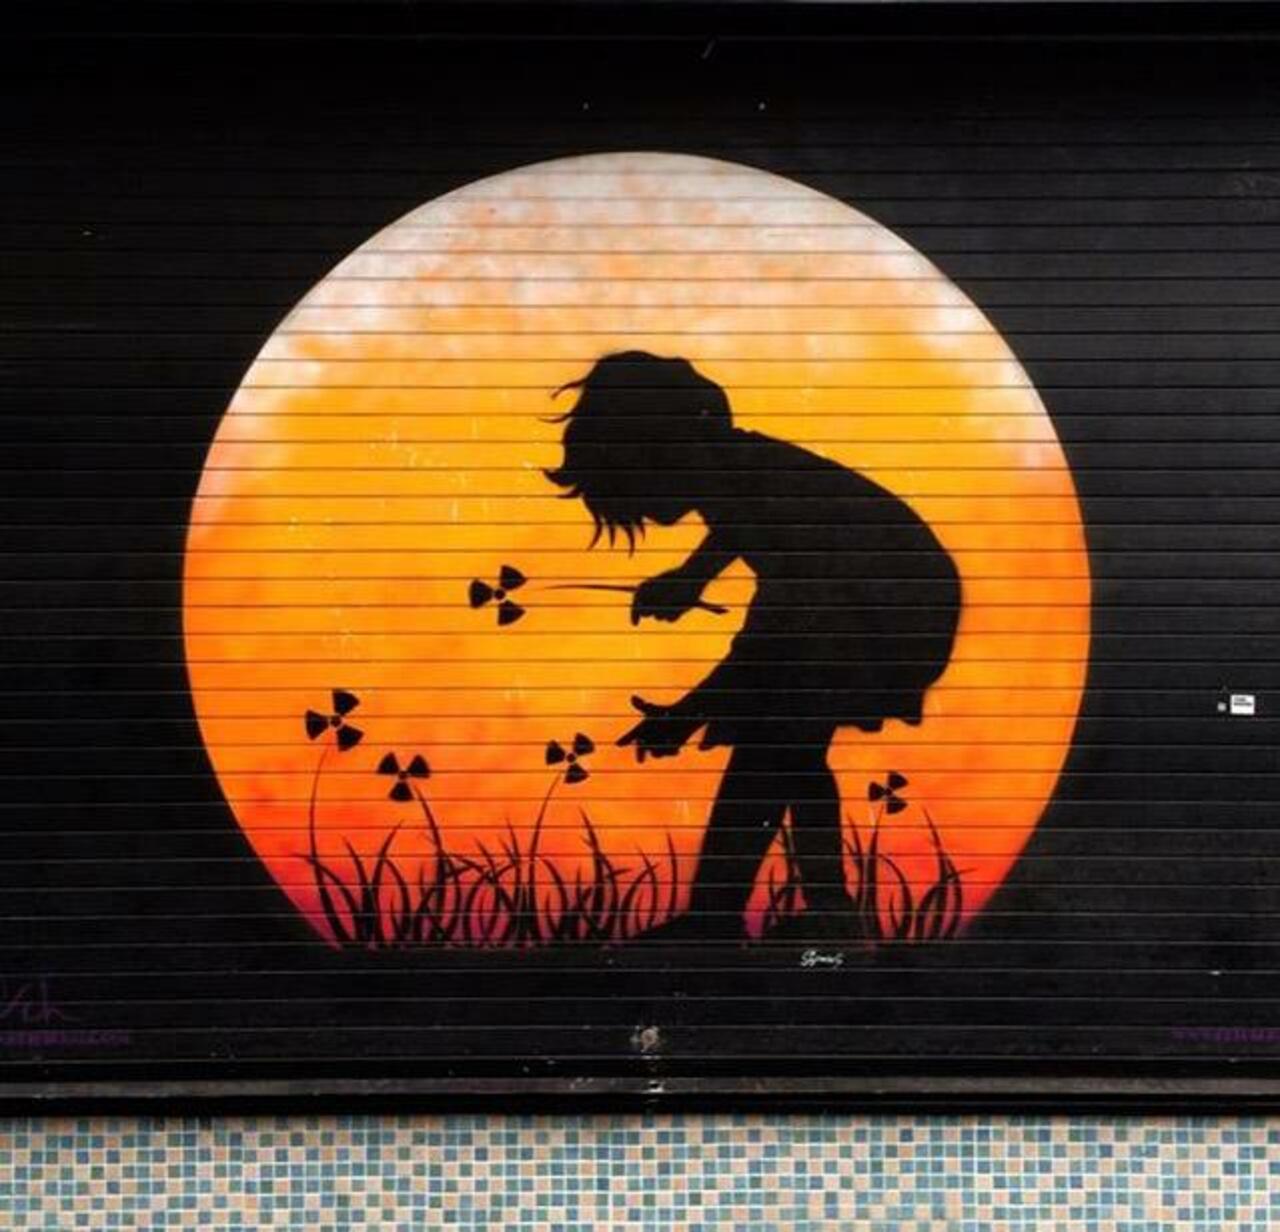 RT @GoogleStreetArt: Street Art by Ottoschade in Hanbury St. London 

#art #arte #graffiti #streetart http://t.co/fI0OypopzS